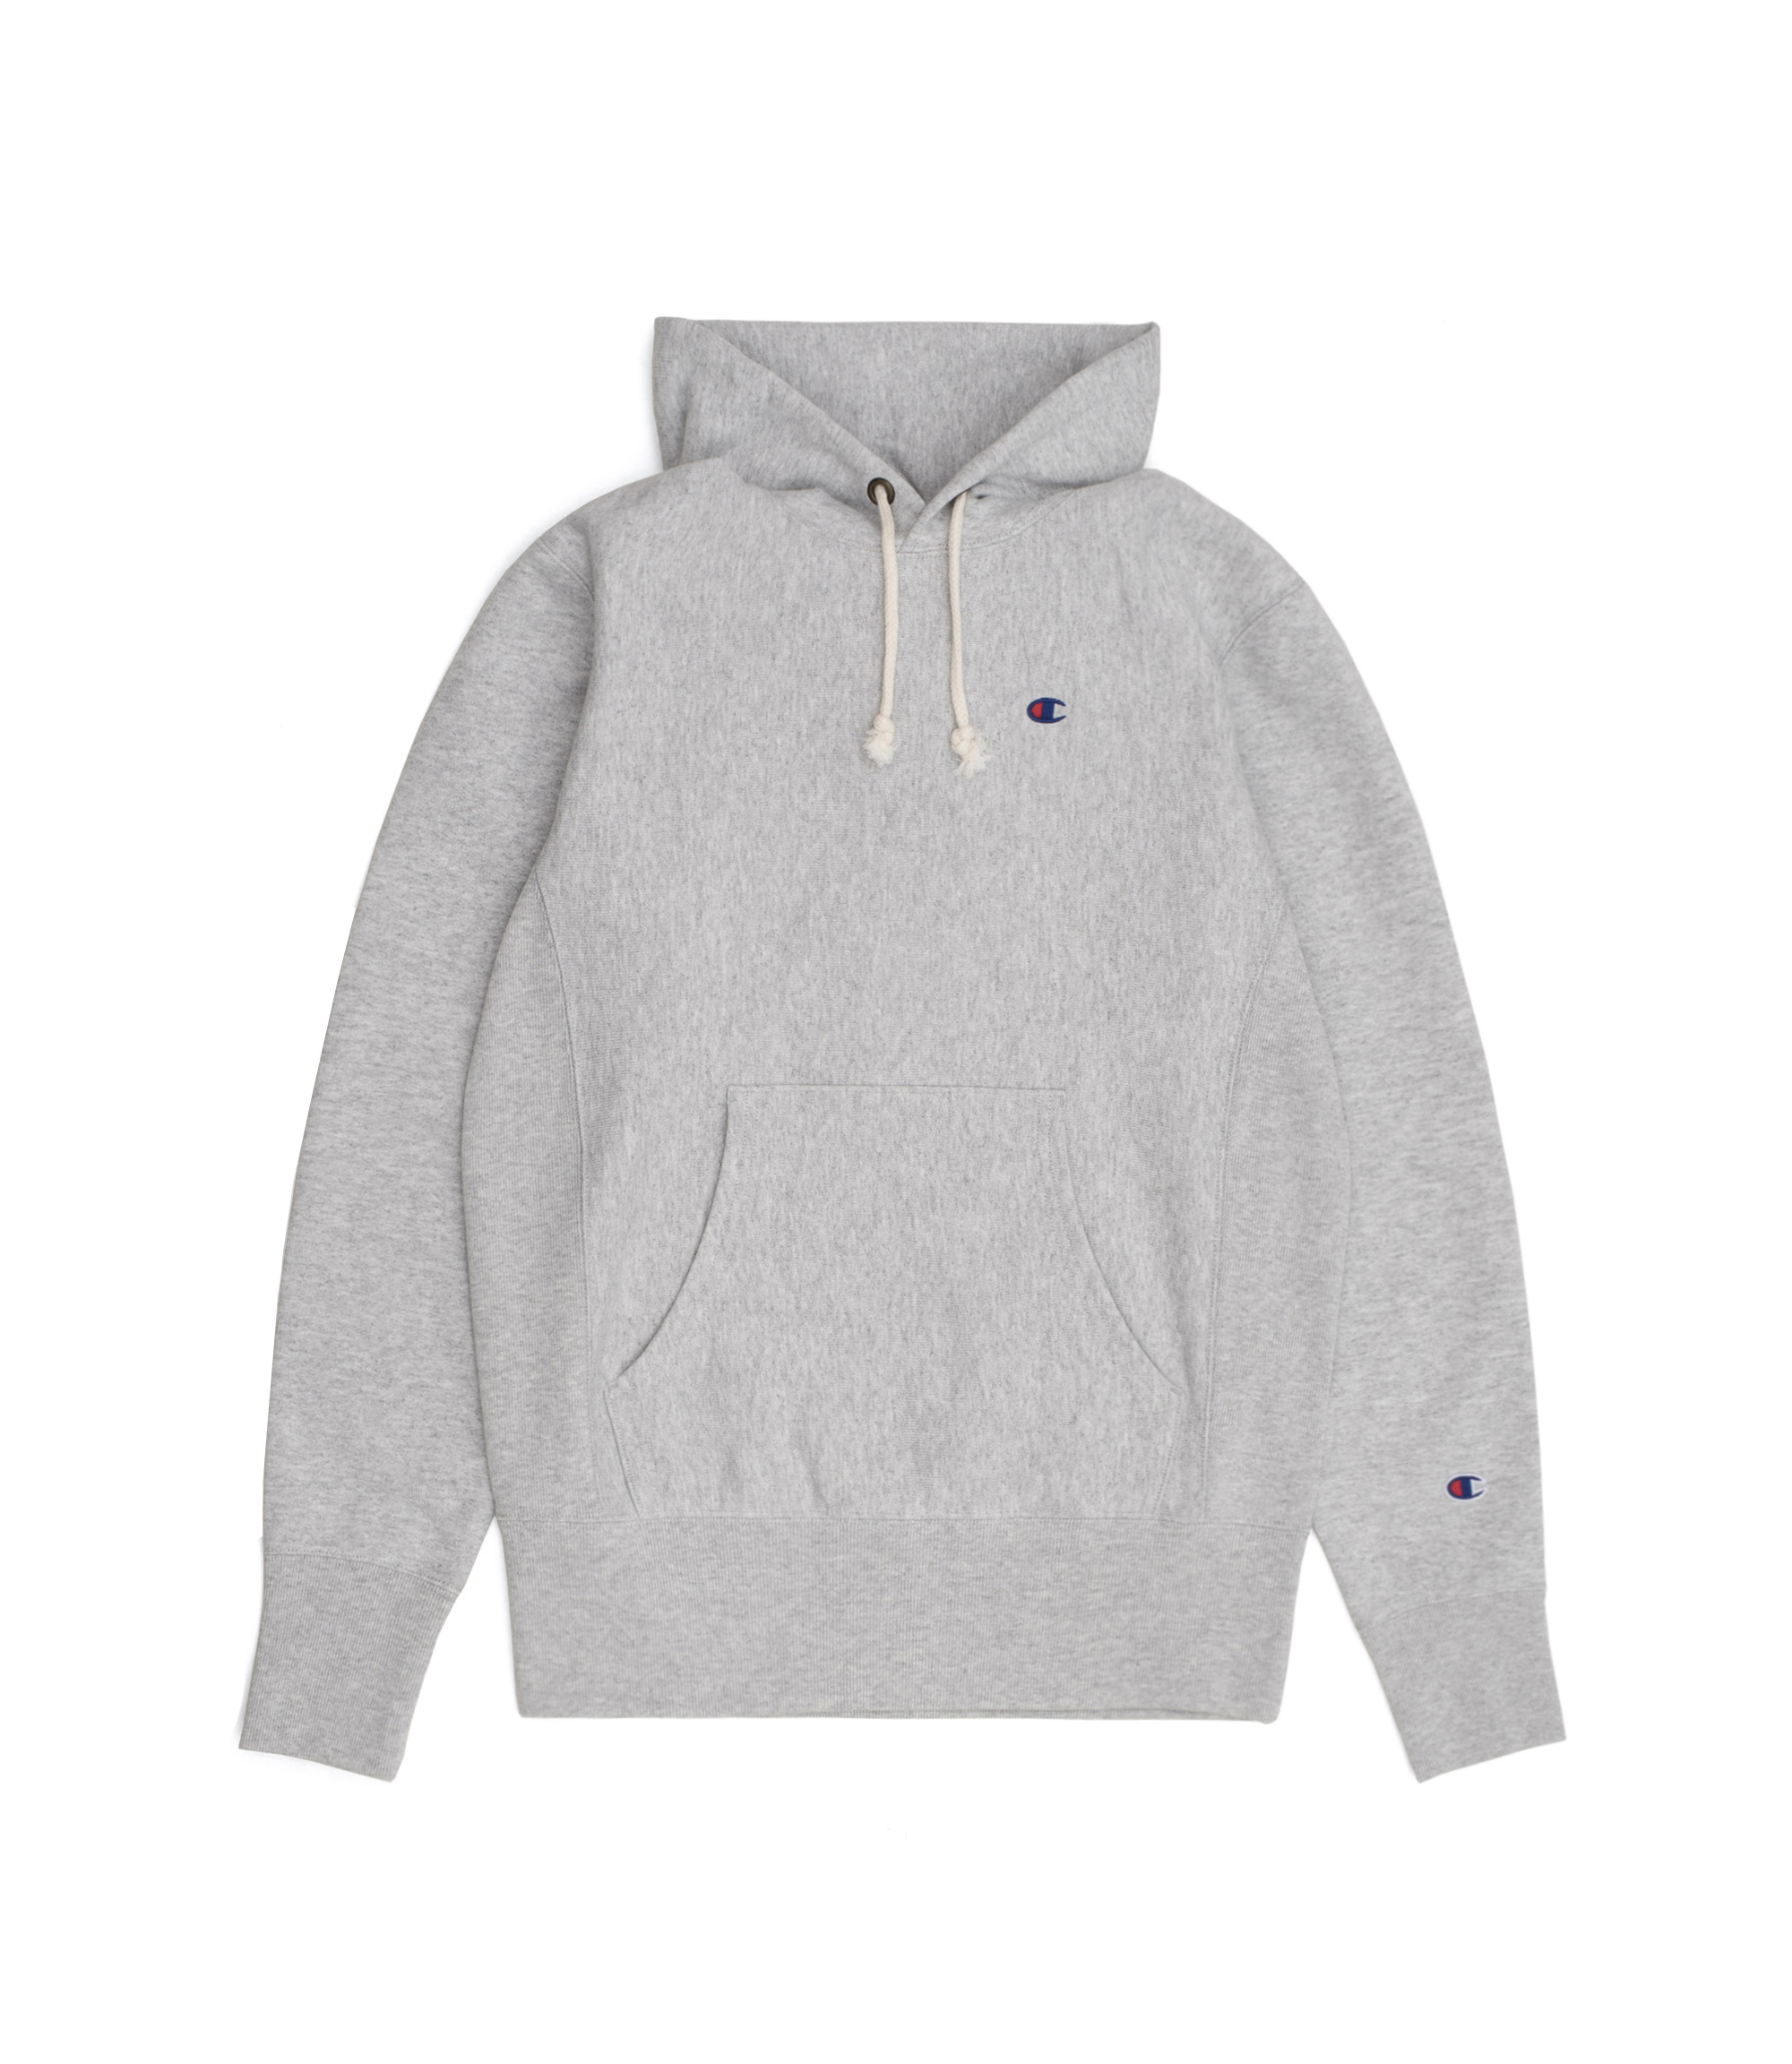 Shop Champion Hooded Sweatshirt Chest Logo Grey at itk online store